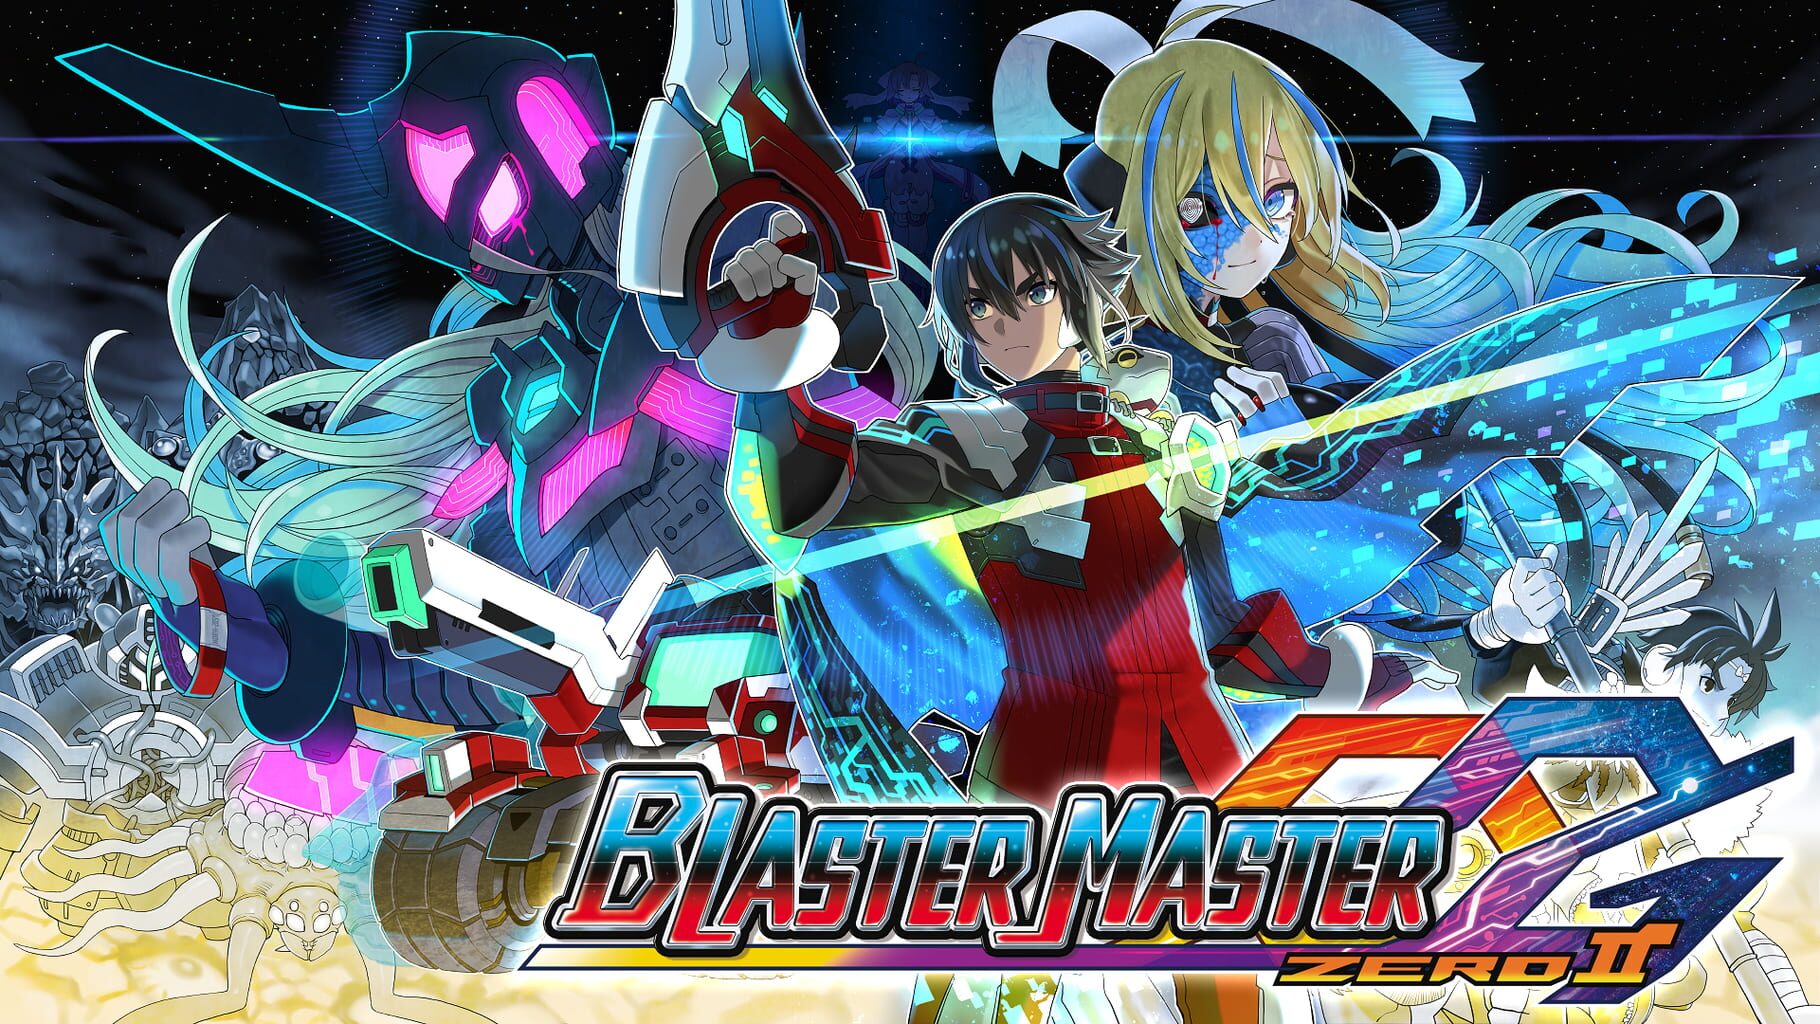 Blaster Master Zero 2 artwork